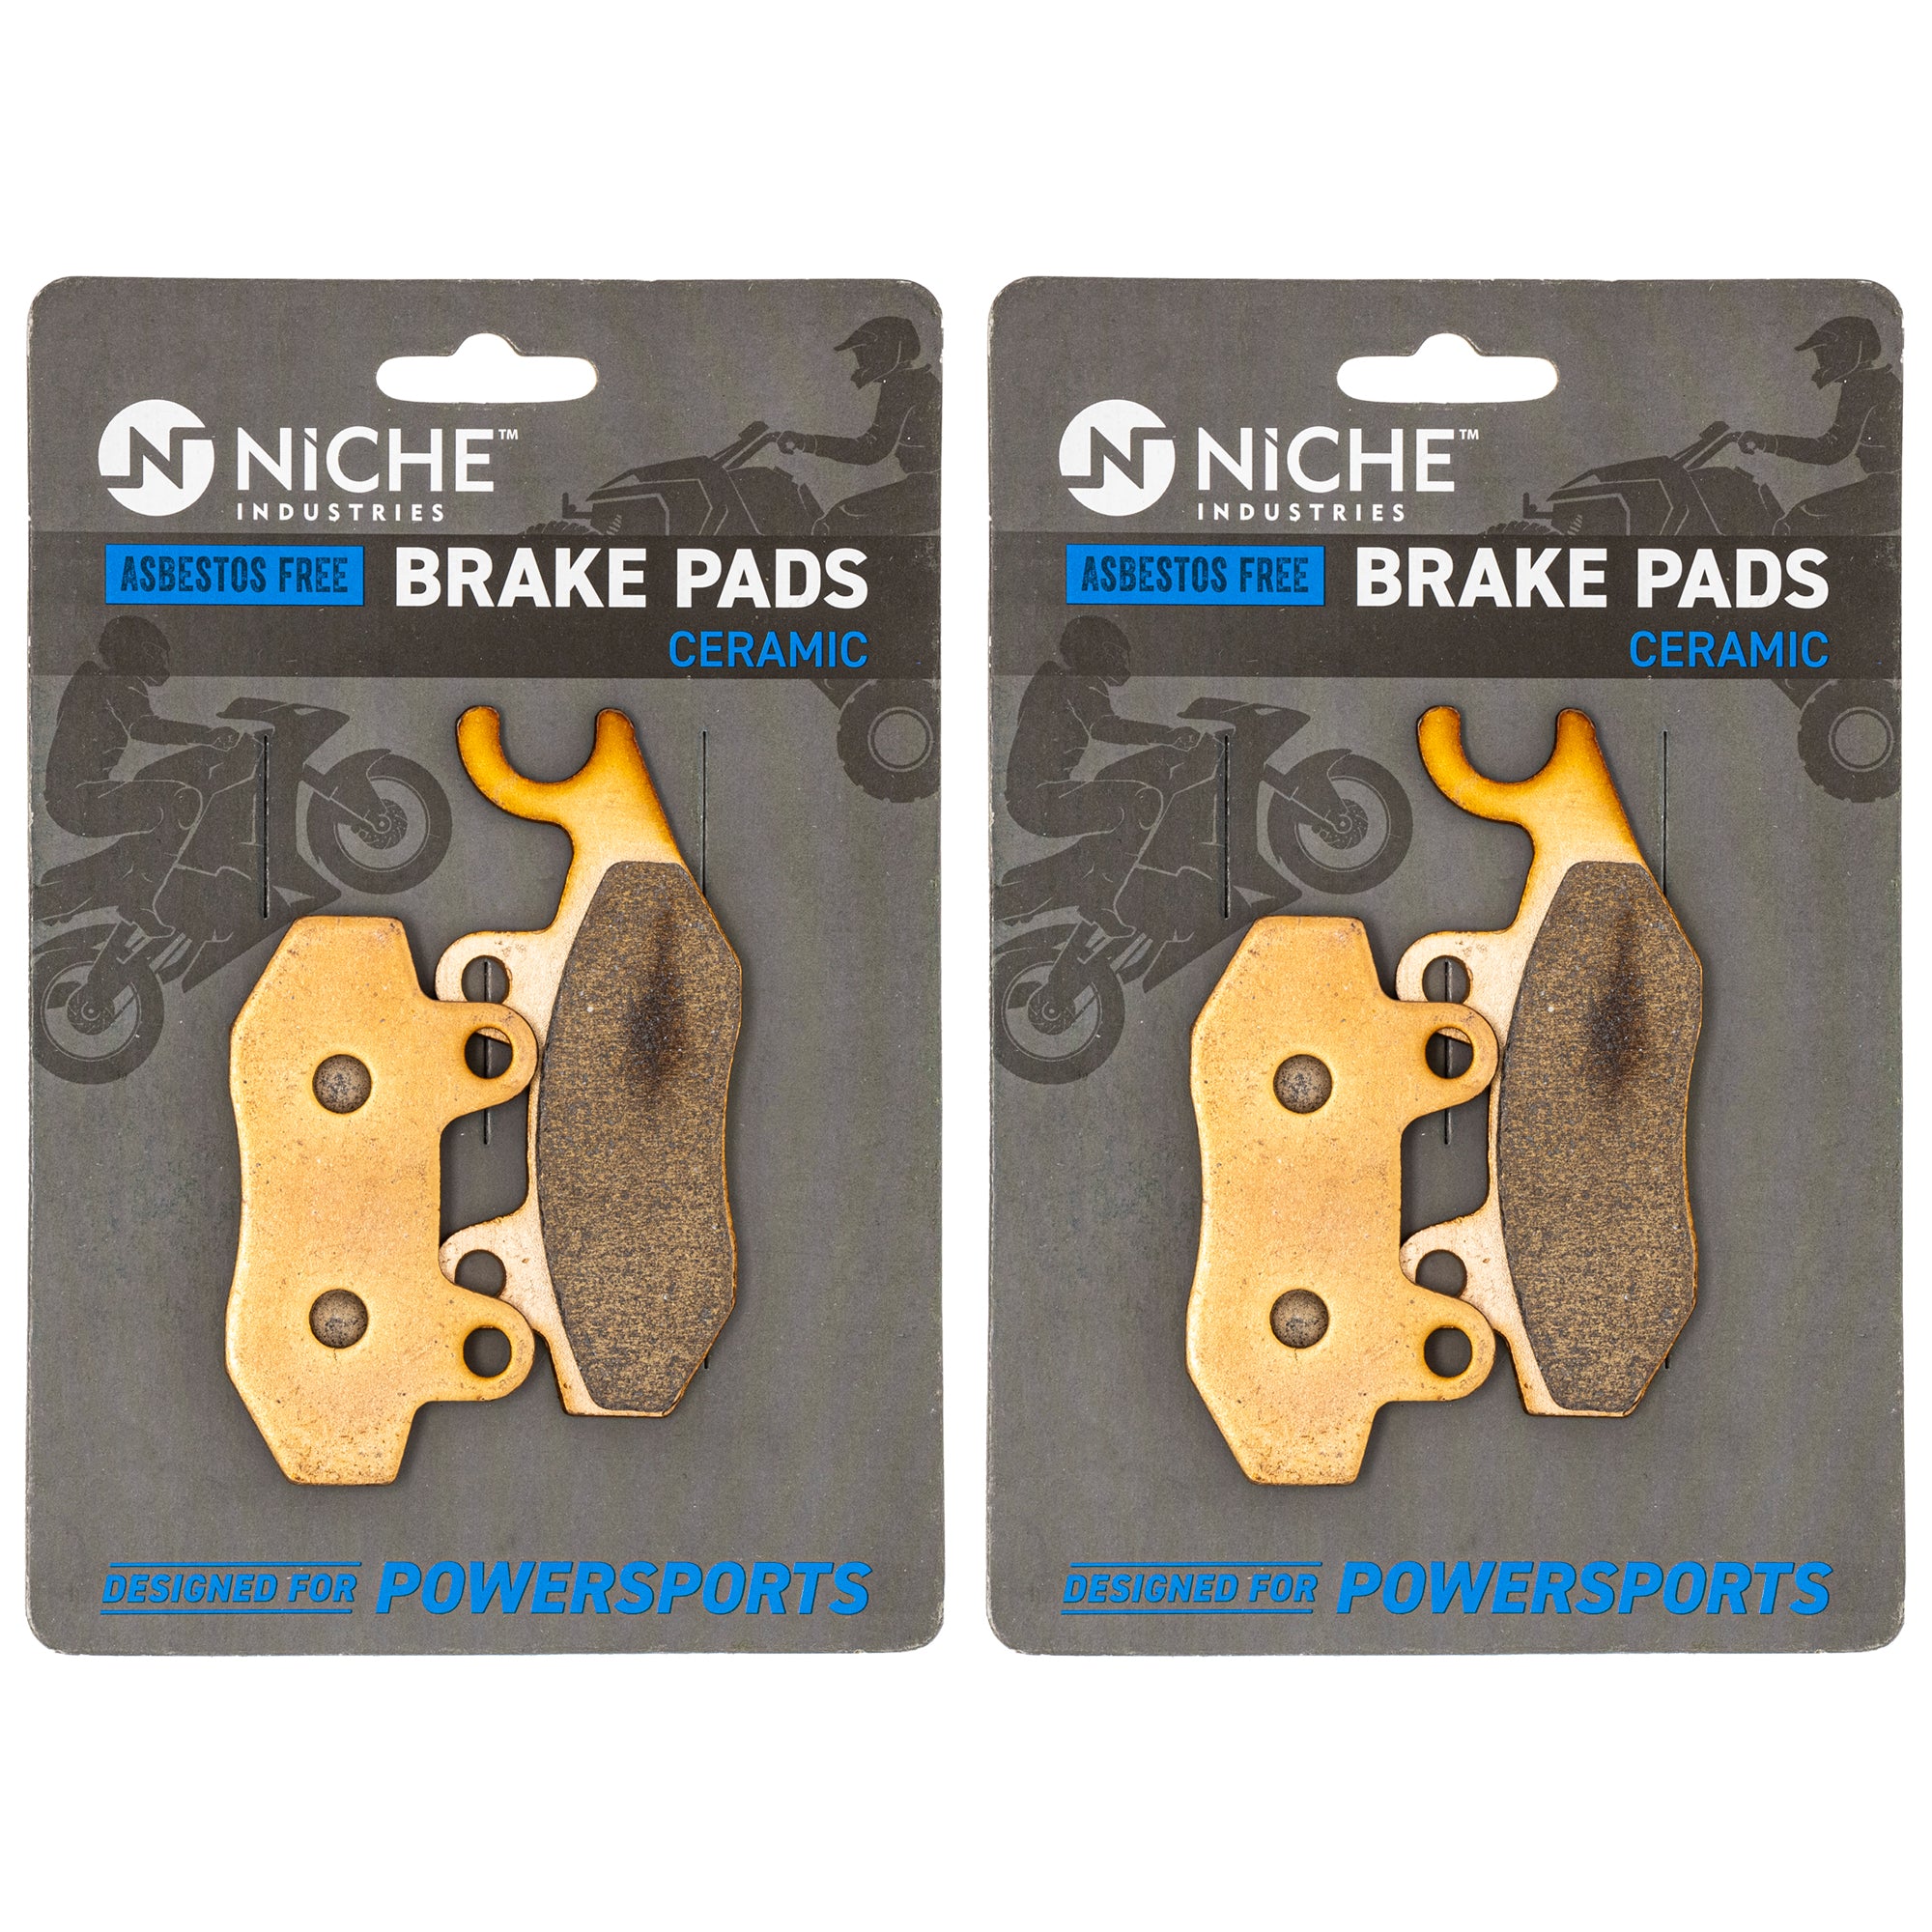 NICHE Ceramic Brake Pad Kit